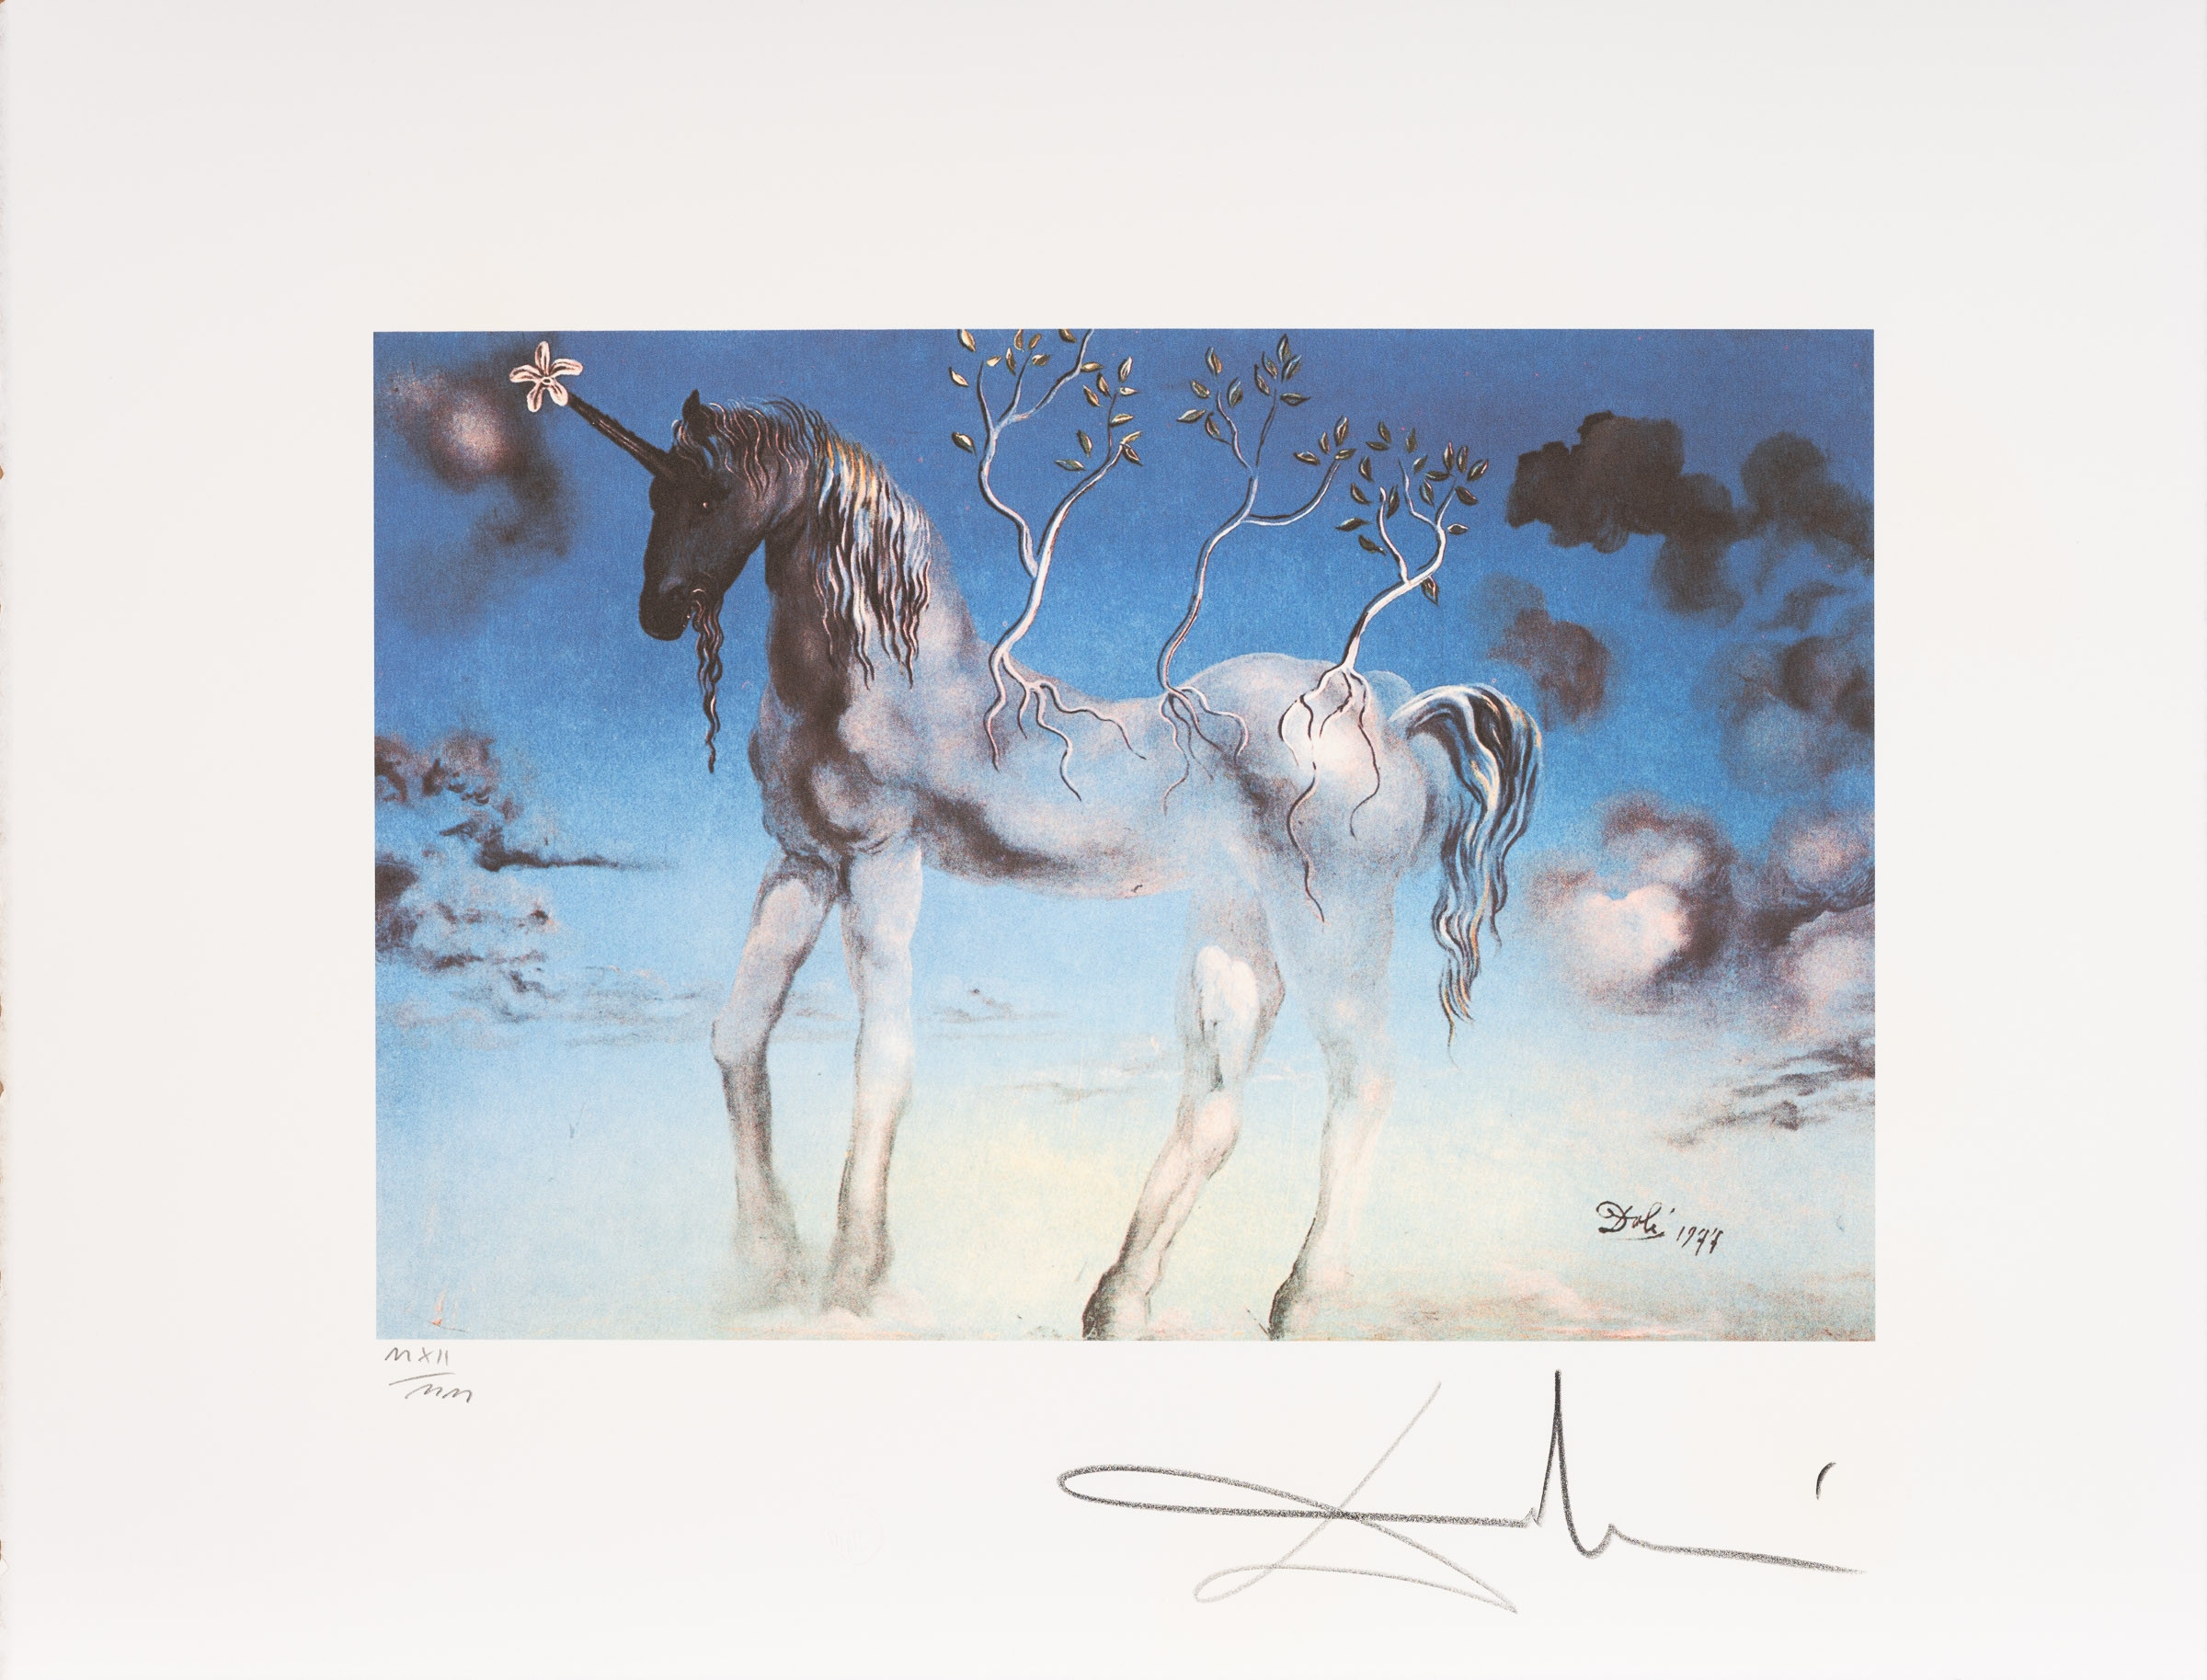 The Happy Unicorn by Salvador Dalí